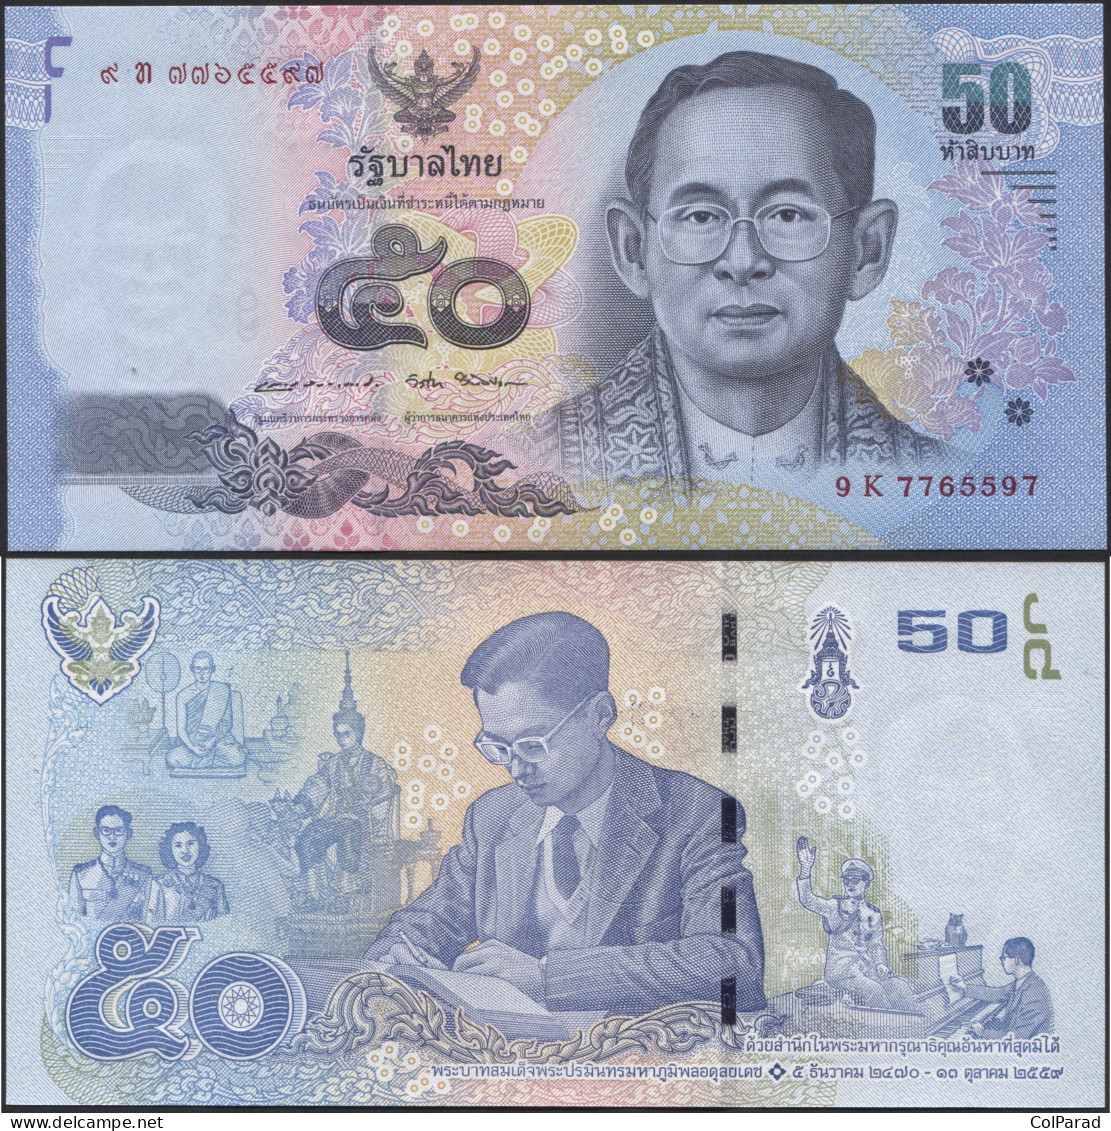 THAILAND 50 BAHT - BE2559 (2017)  - Paper Unc - P.131a Banknote - Thailand